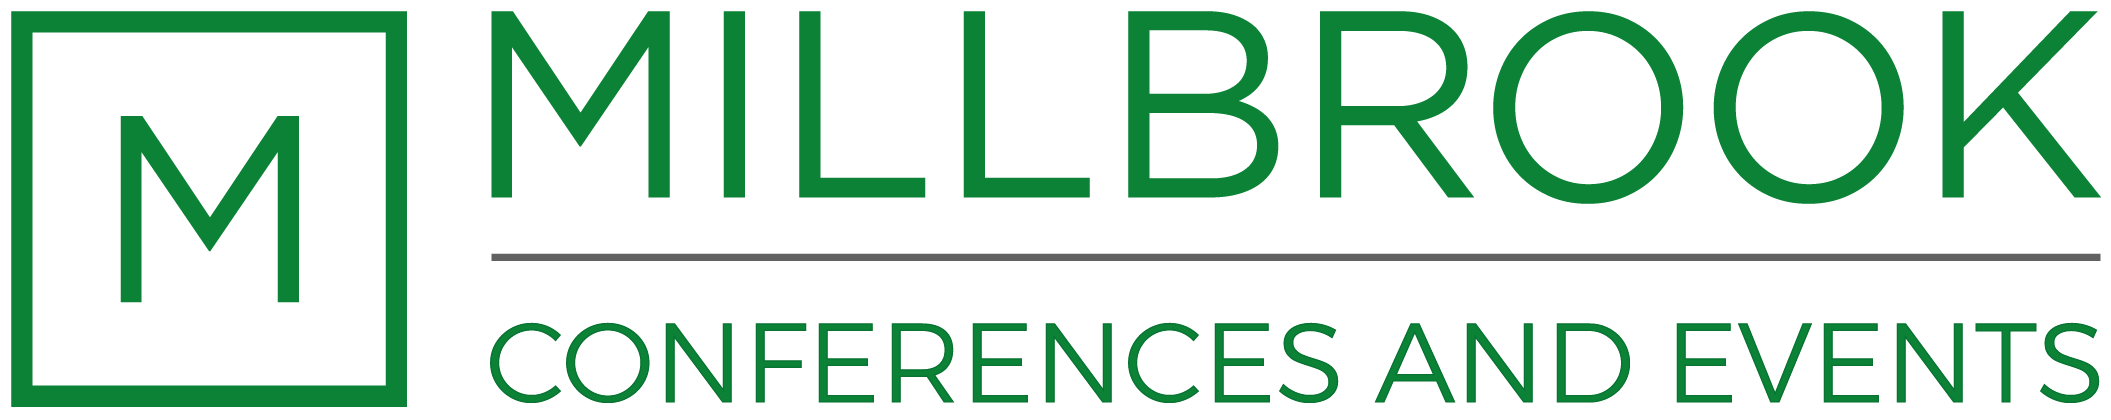 Millbrook Conferences & Events